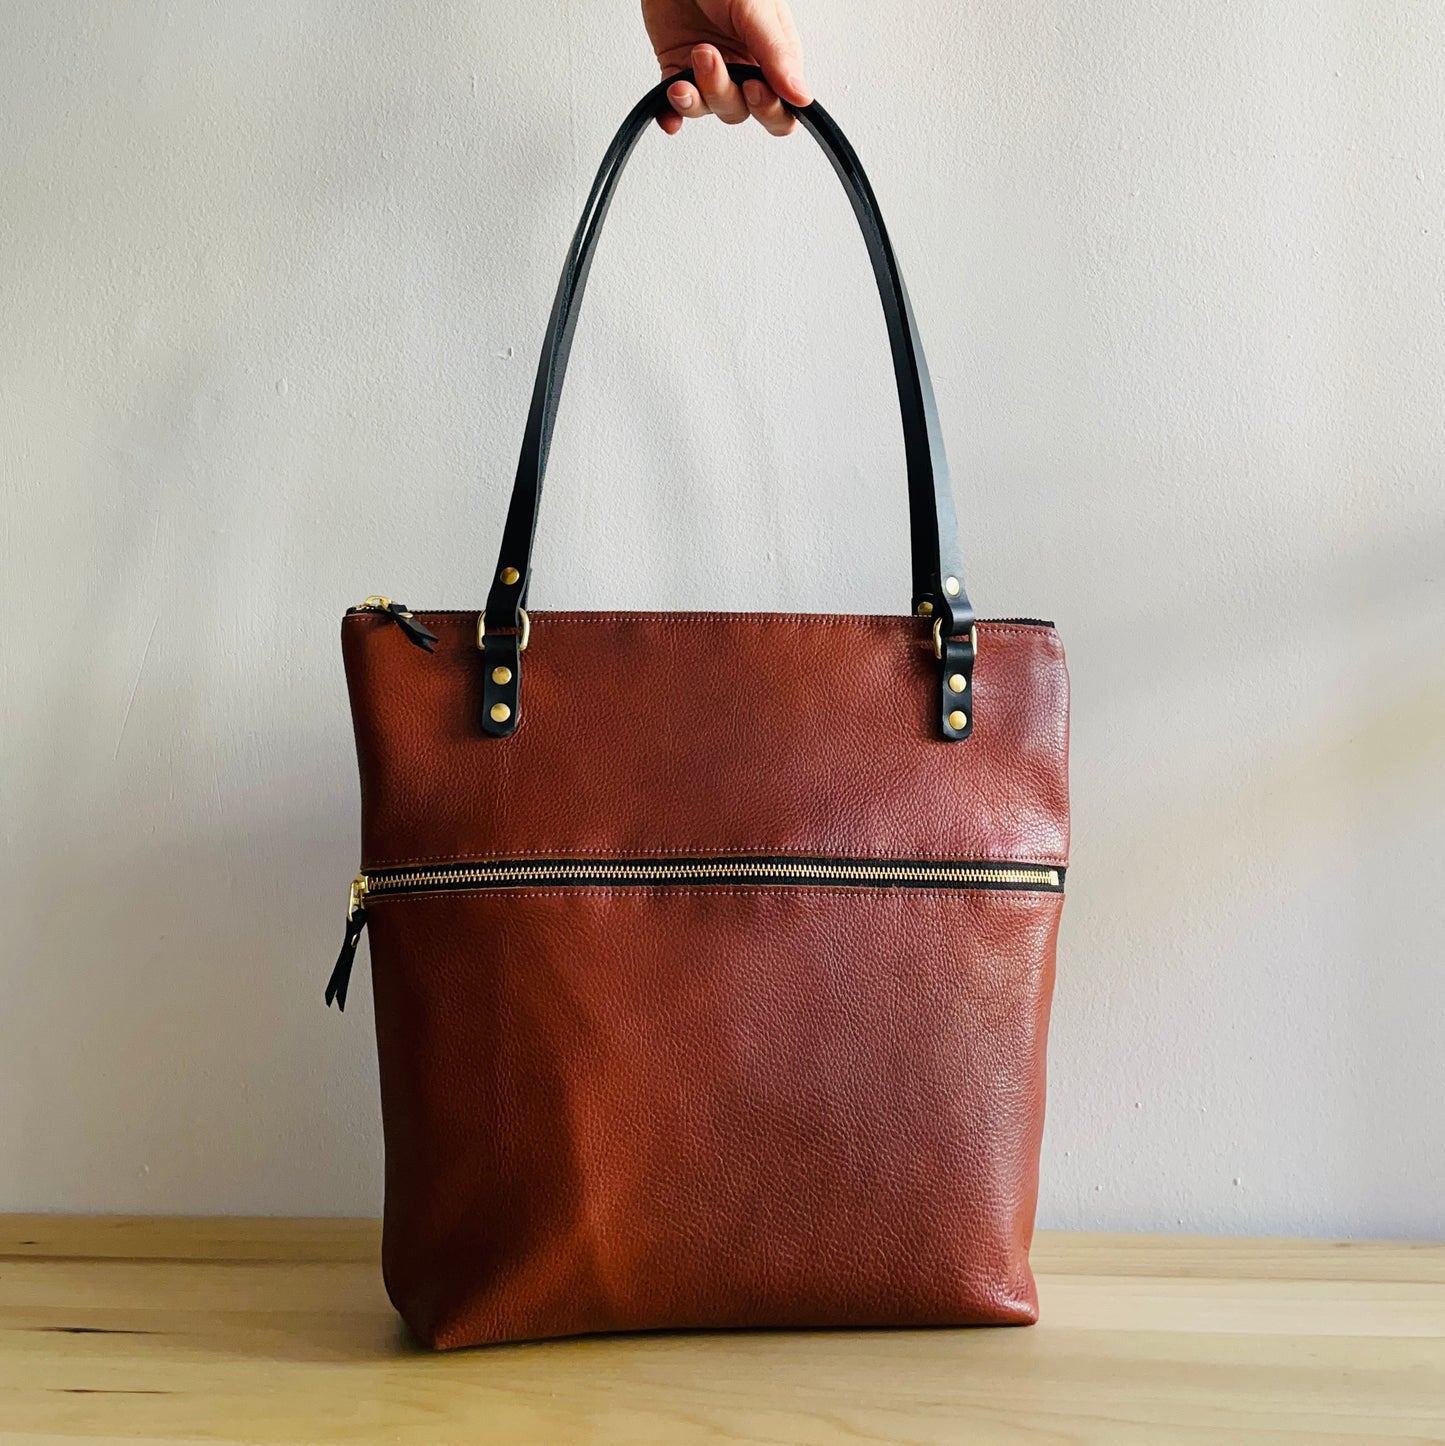 Cognac leather shoulder bag with zipper